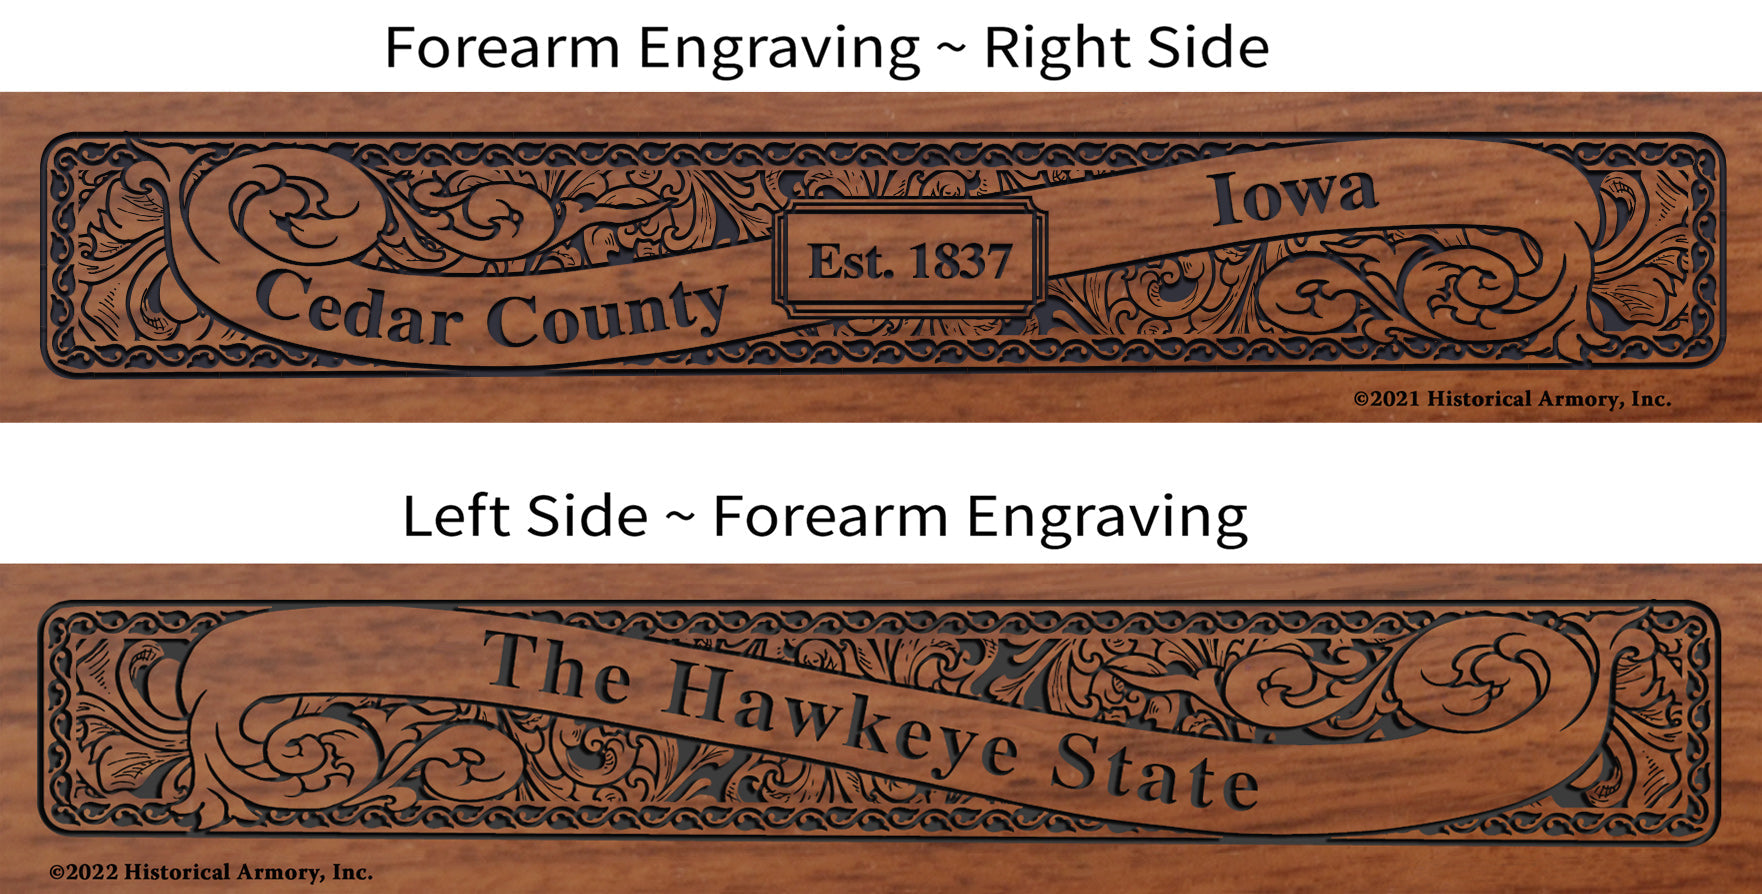 Cedar County Iowa Engraved Rifle Forearm